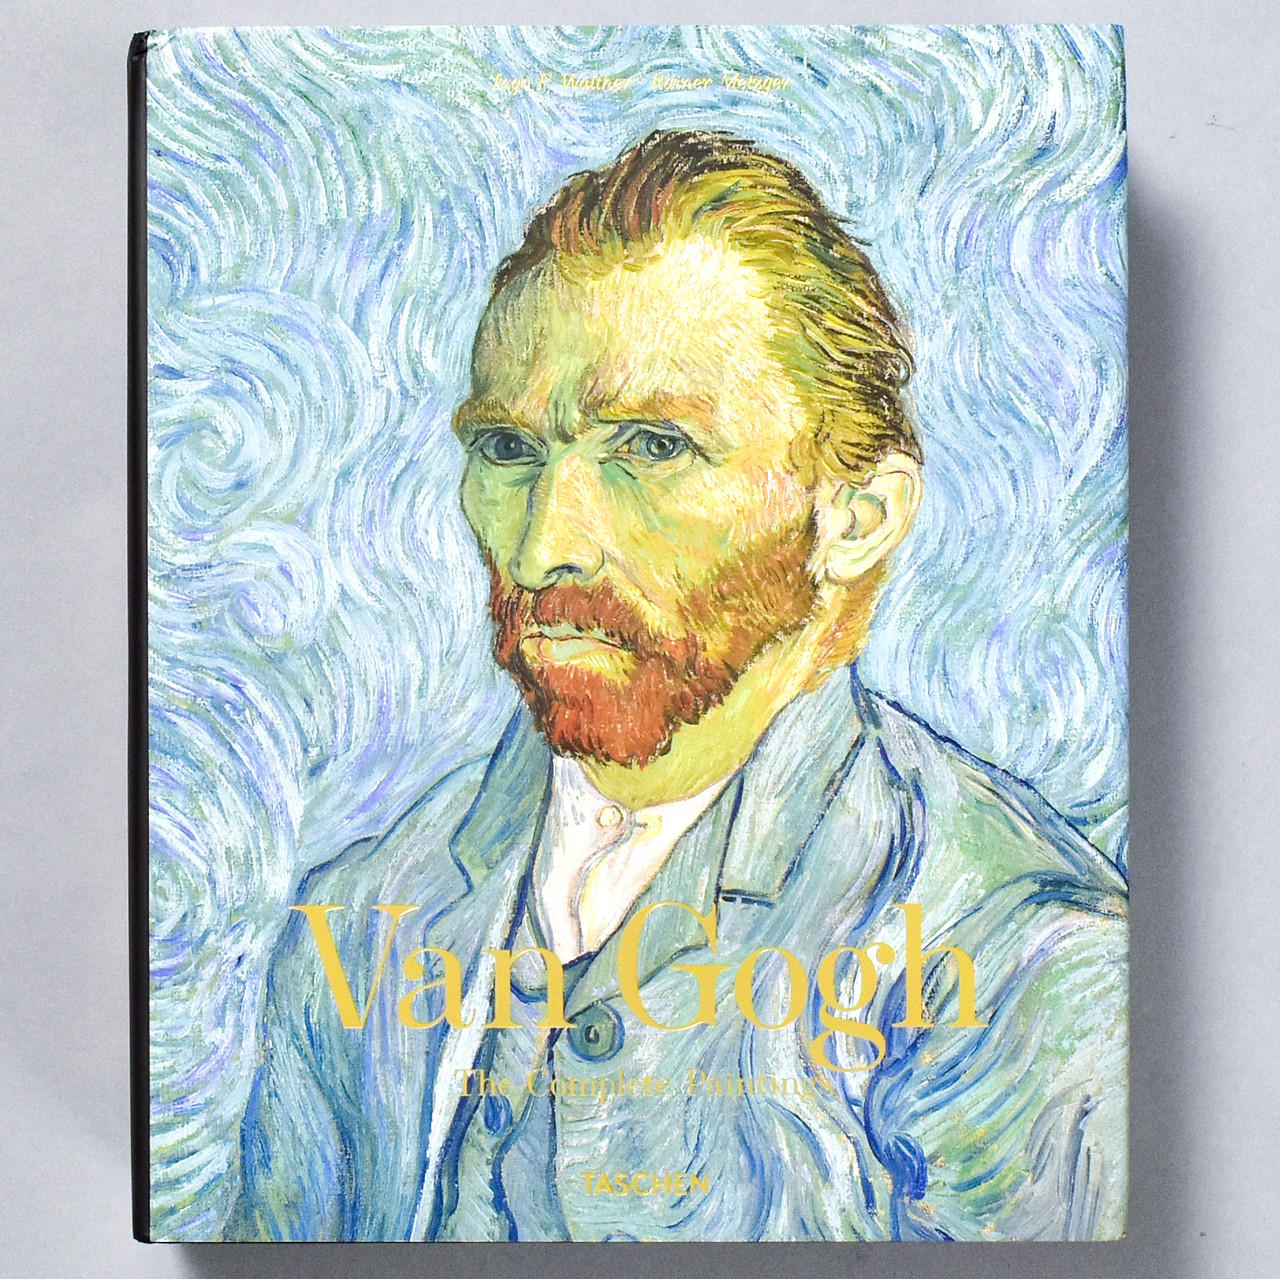 Vincent van Gogh, Art for Sale, Results & Biography